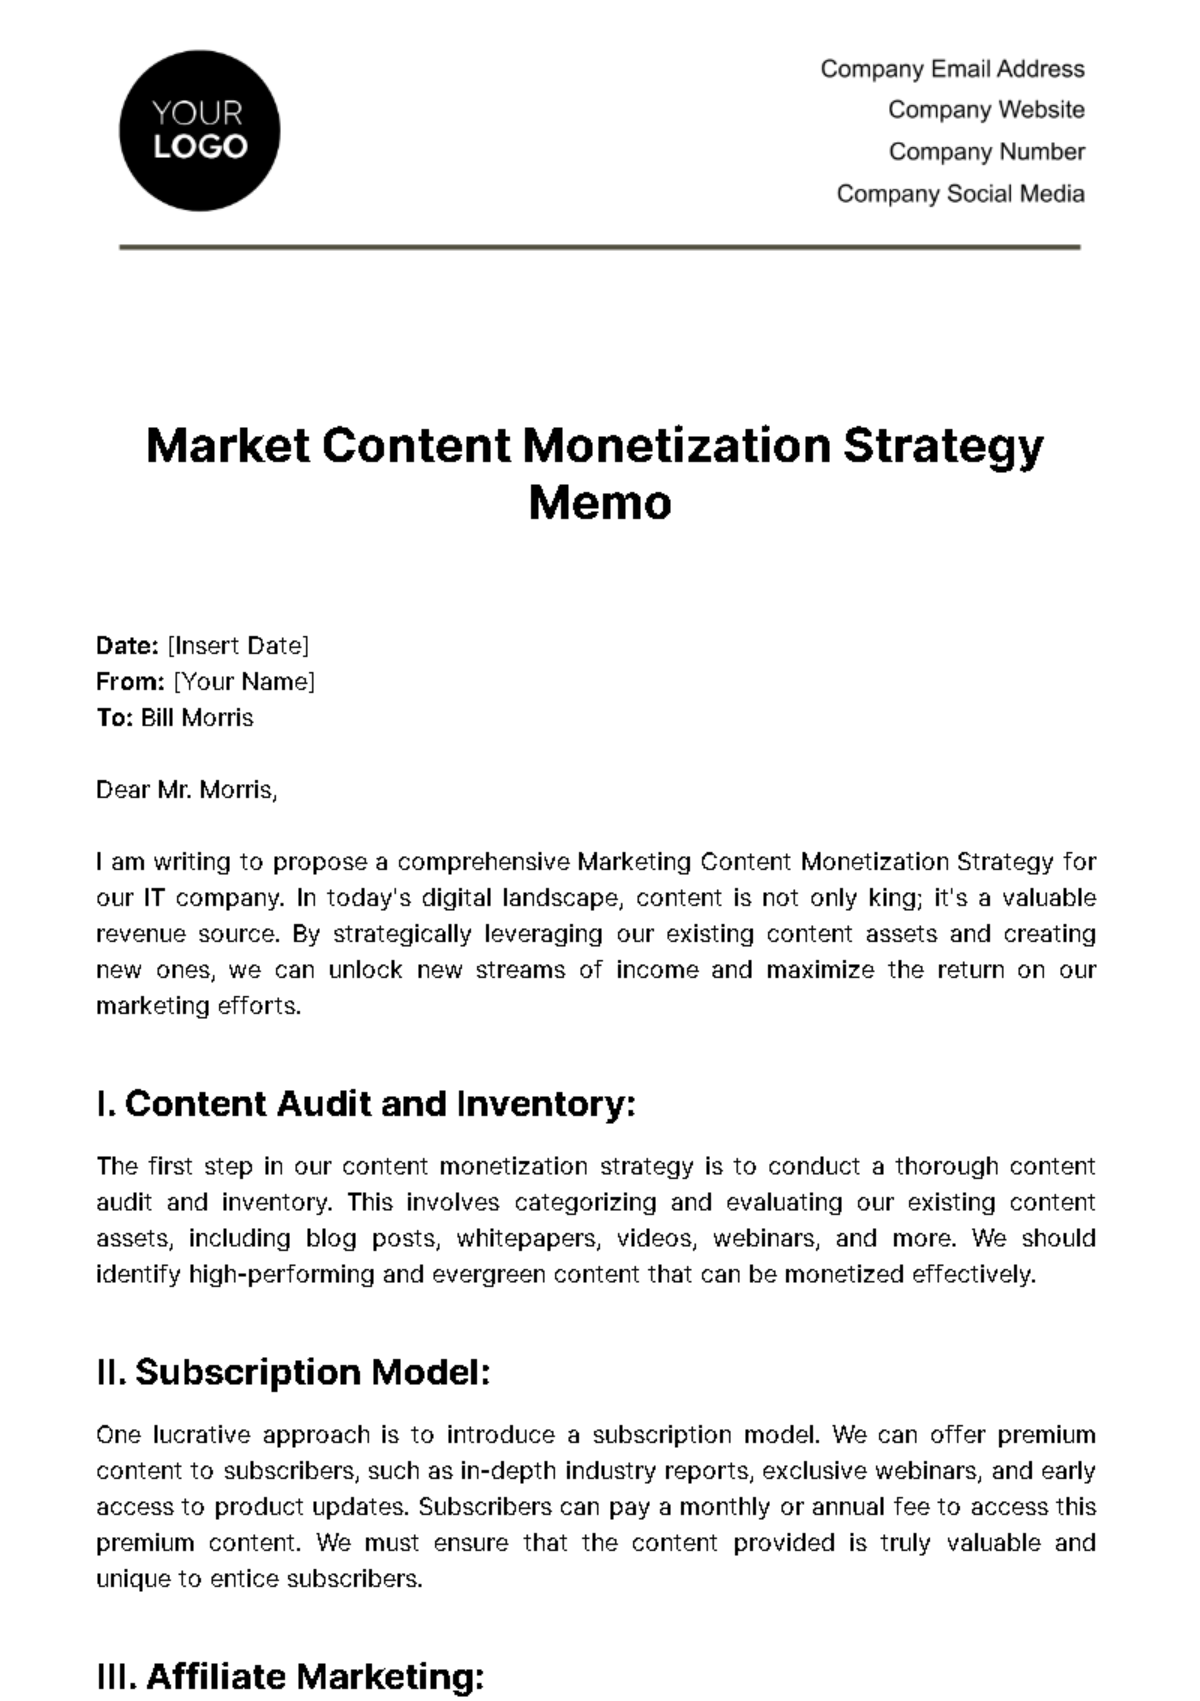 Marketing Content Monetization Strategy Memo Template